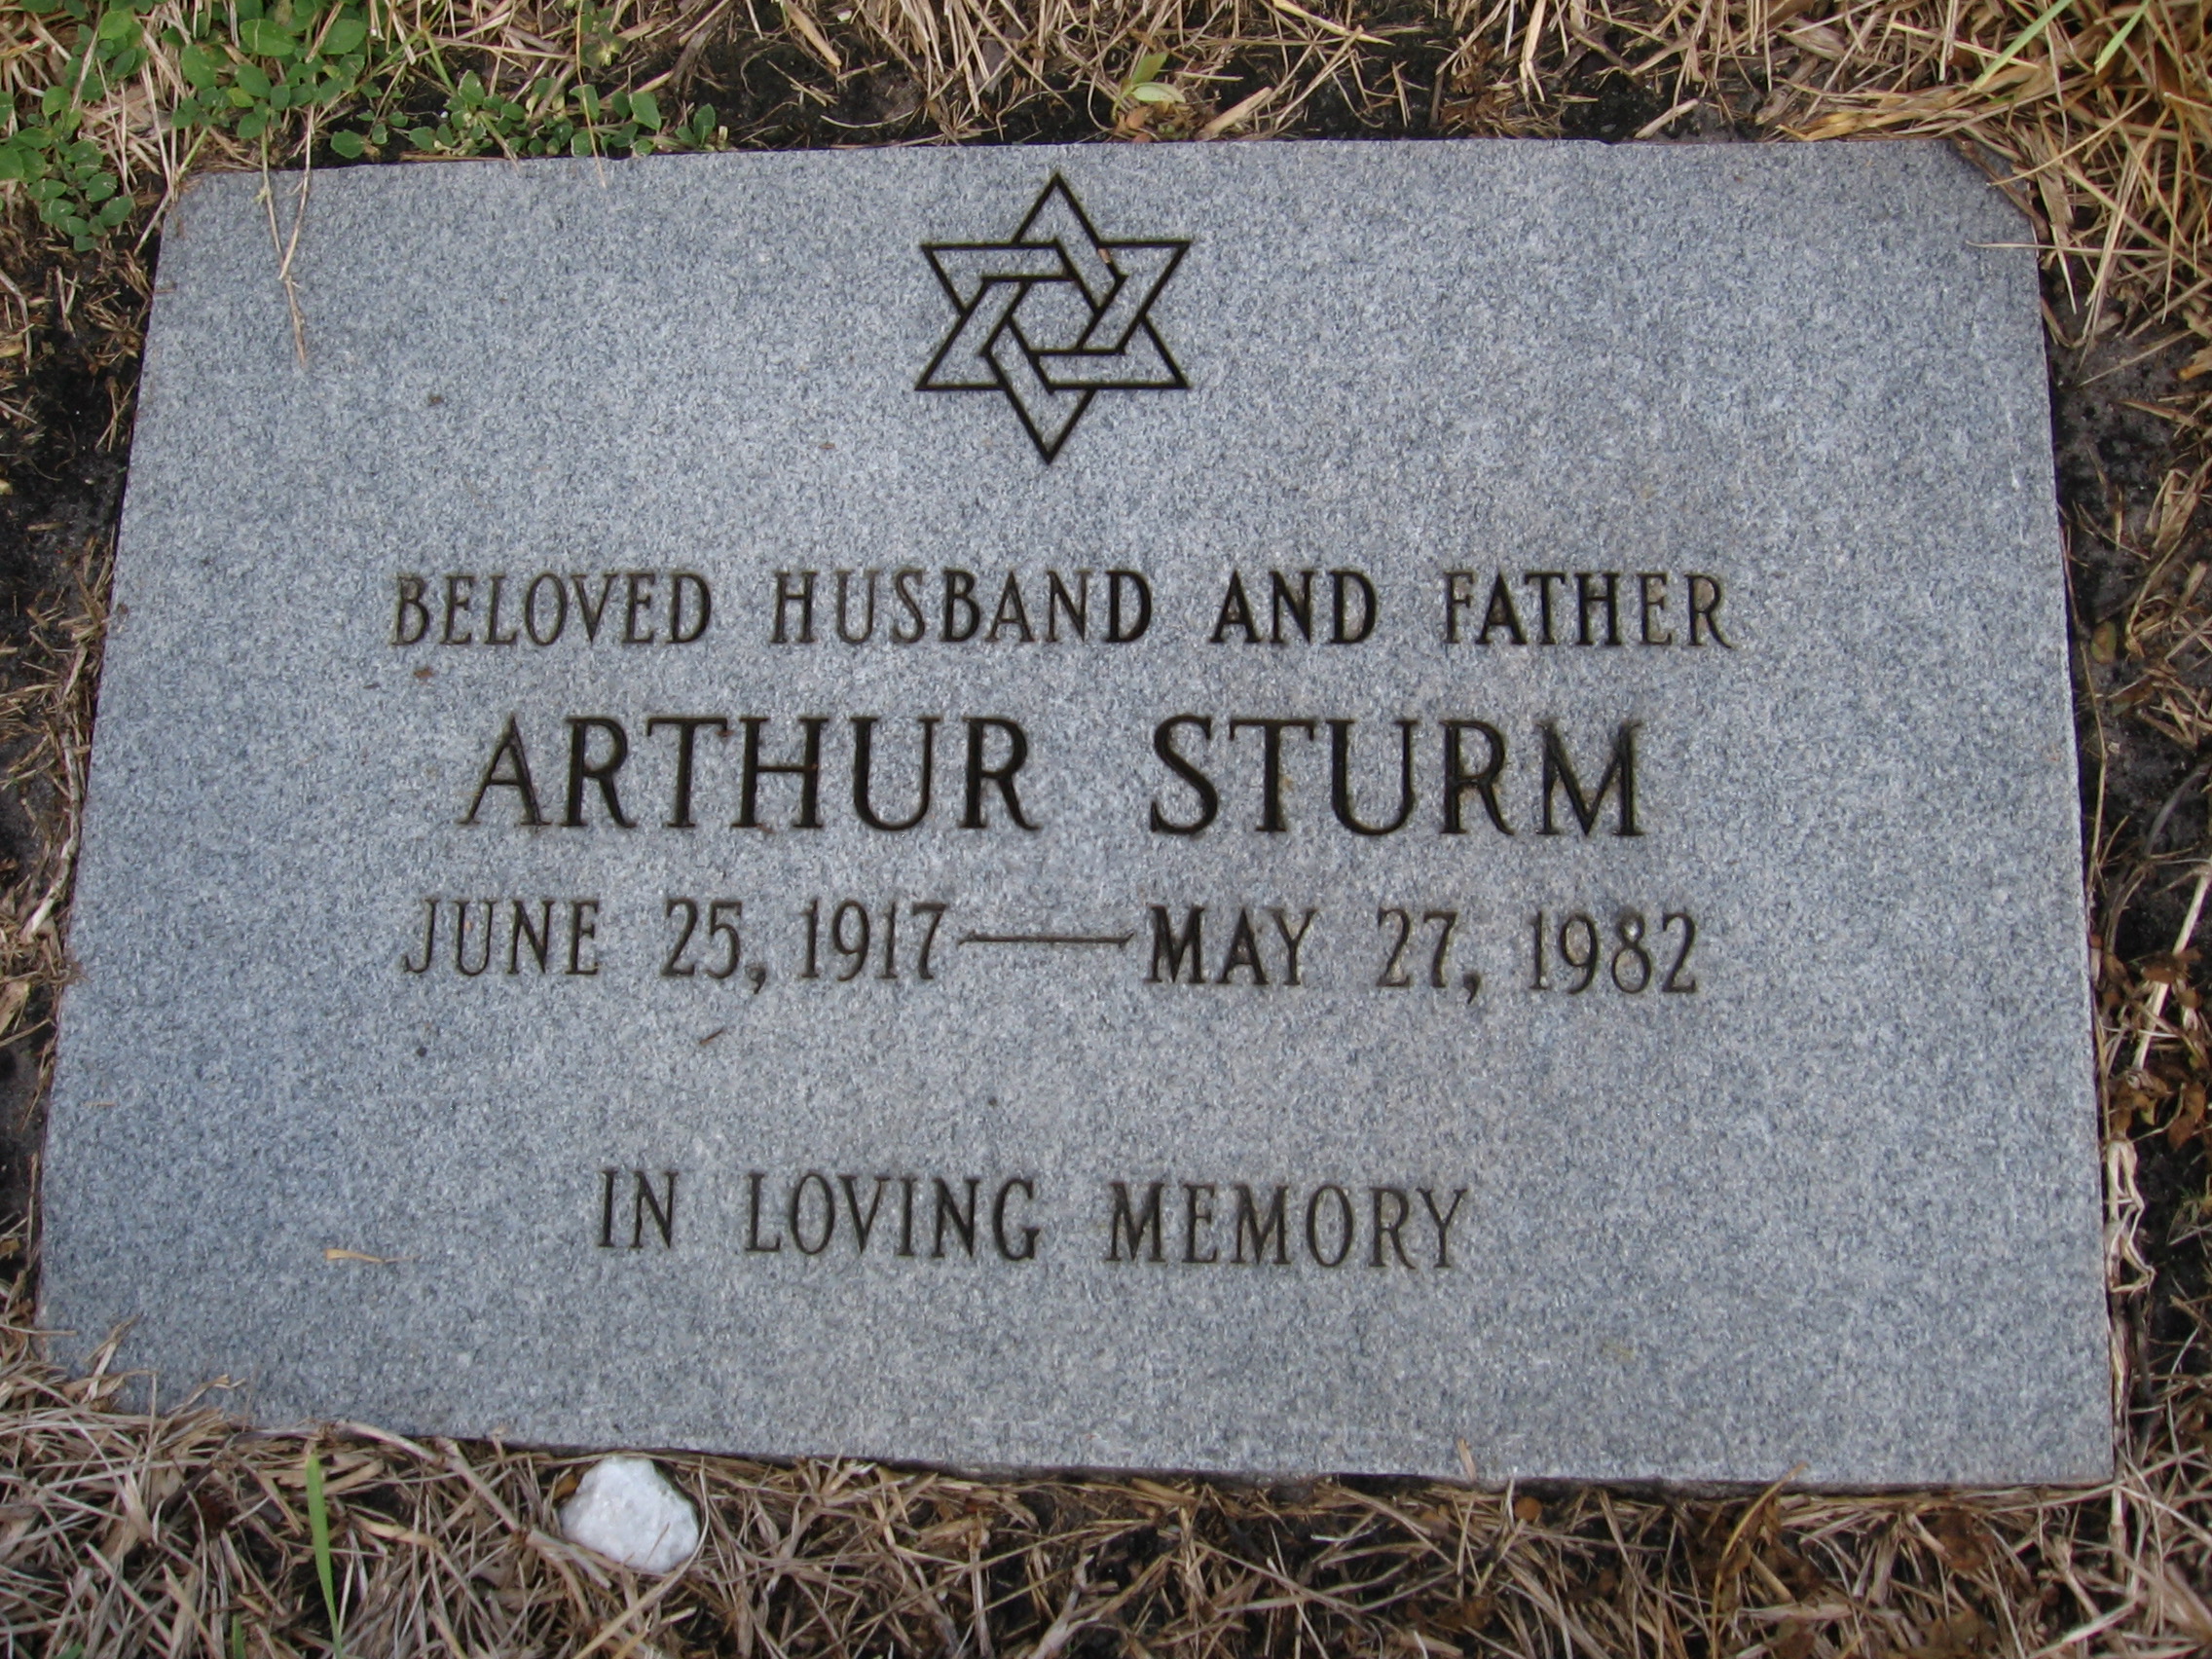 Arthur Sturm